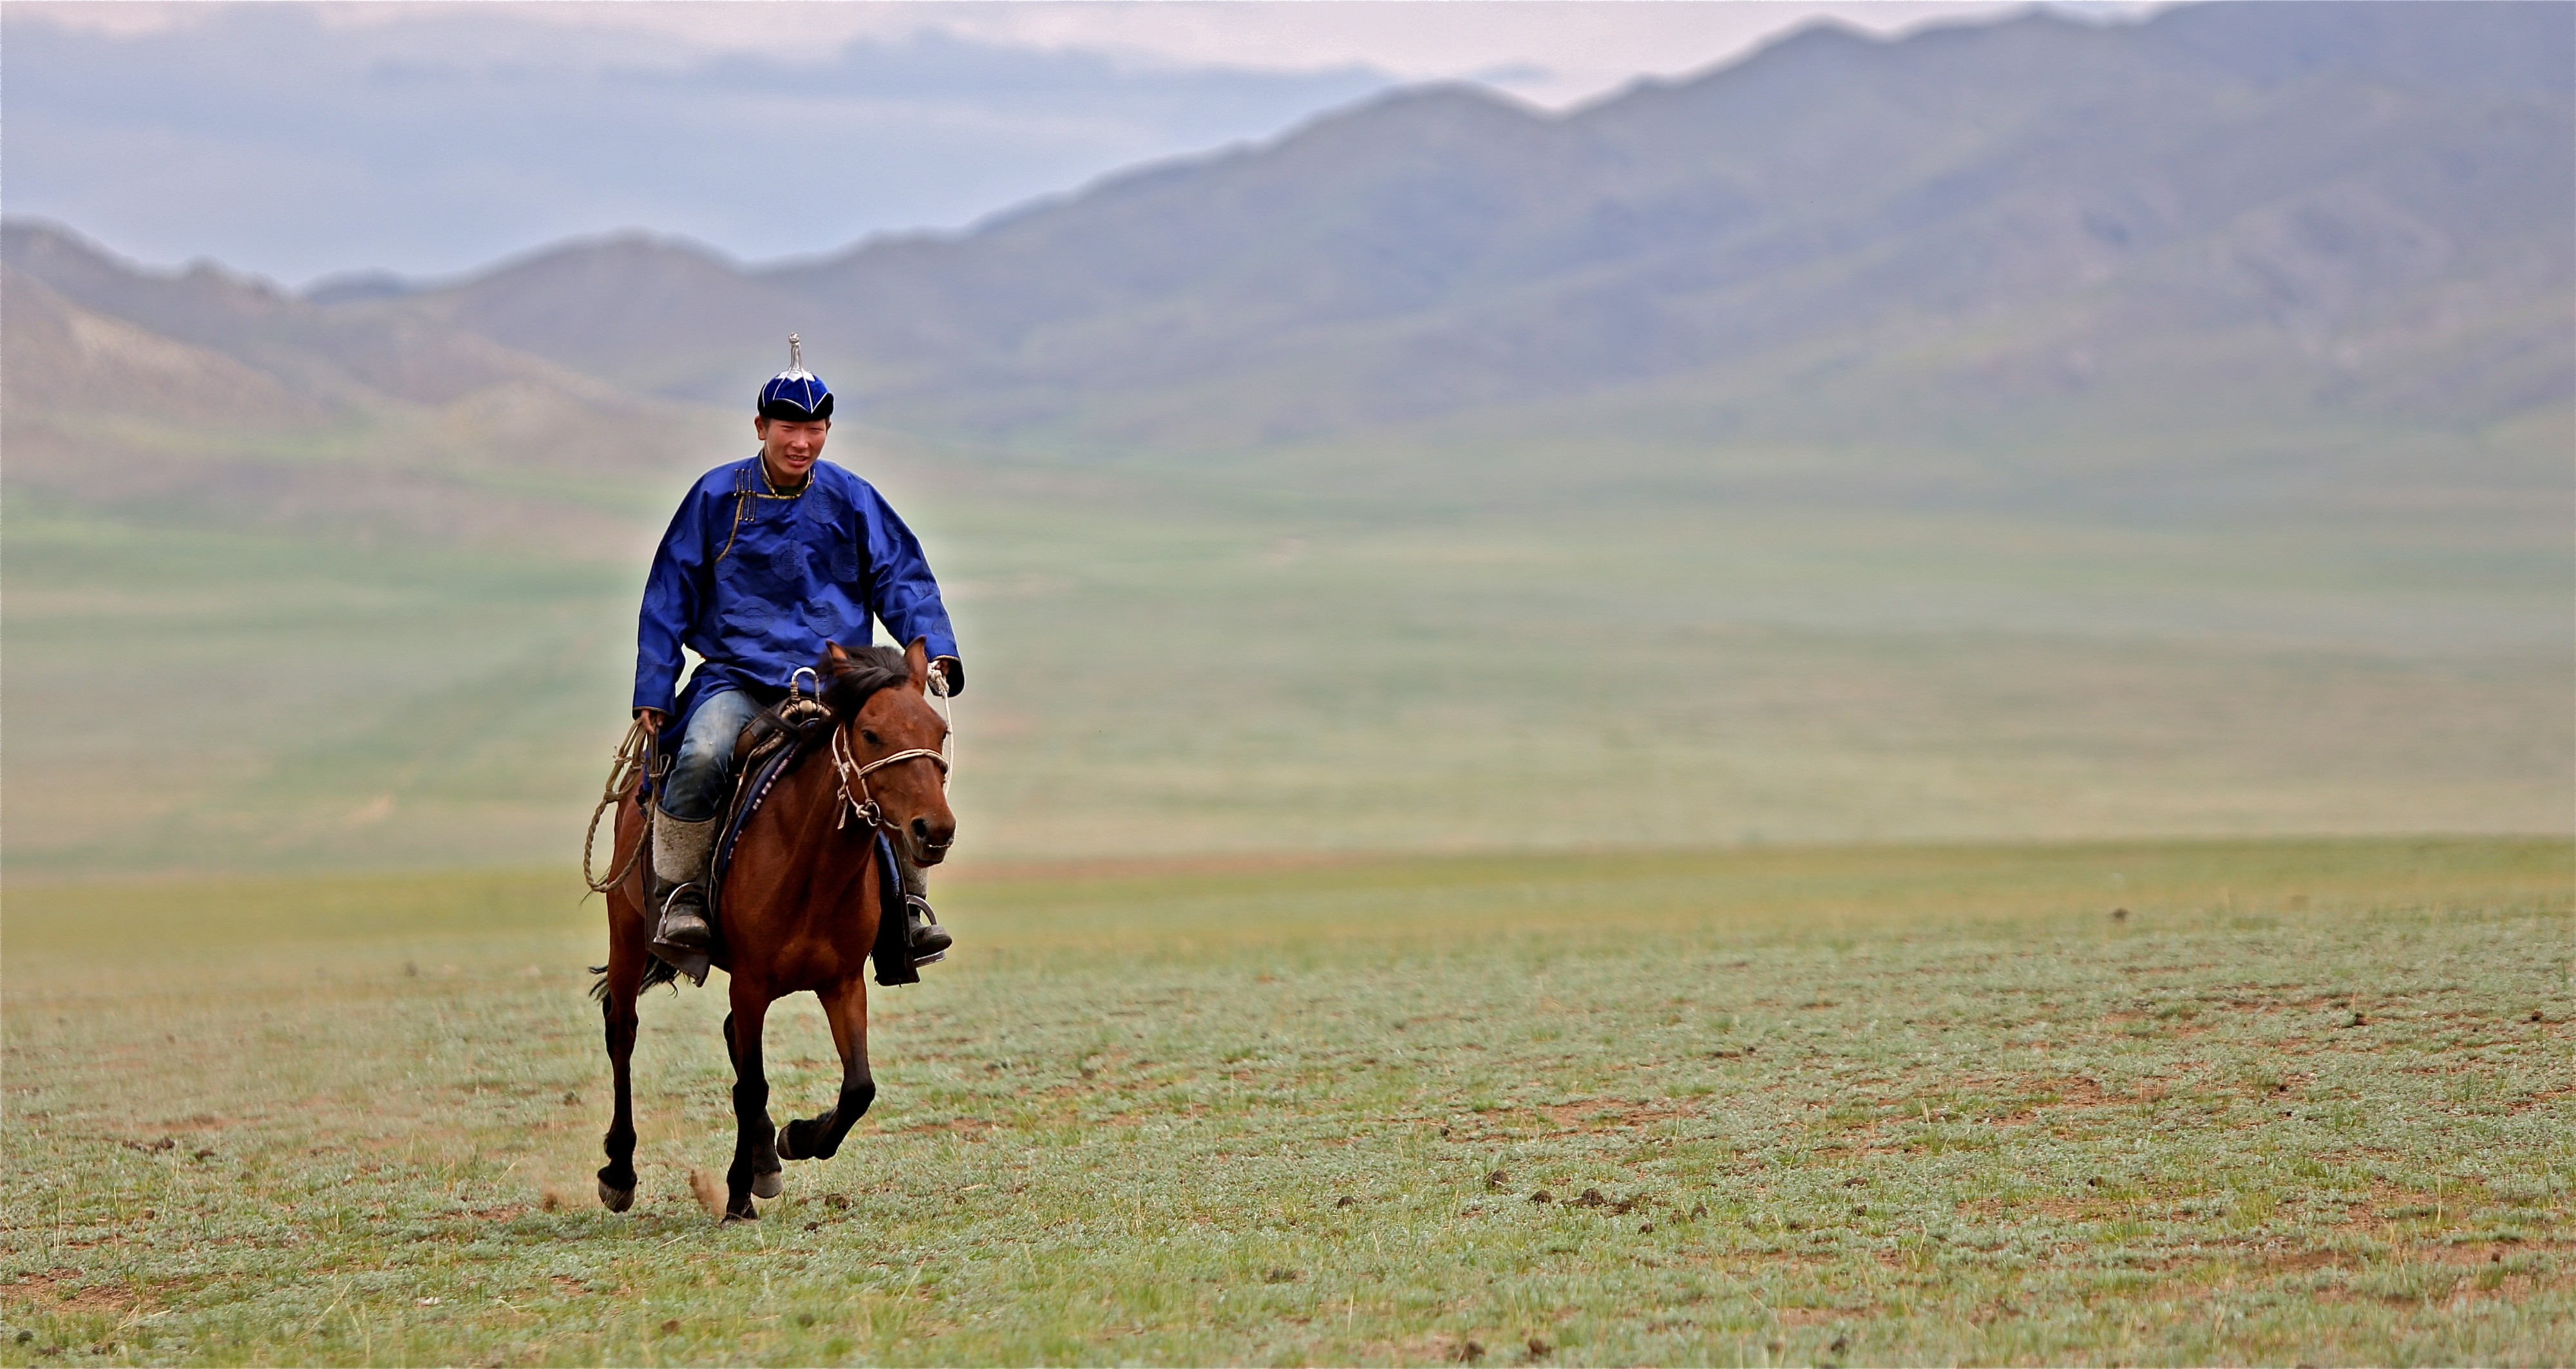 Rider in Mongolia, 2012